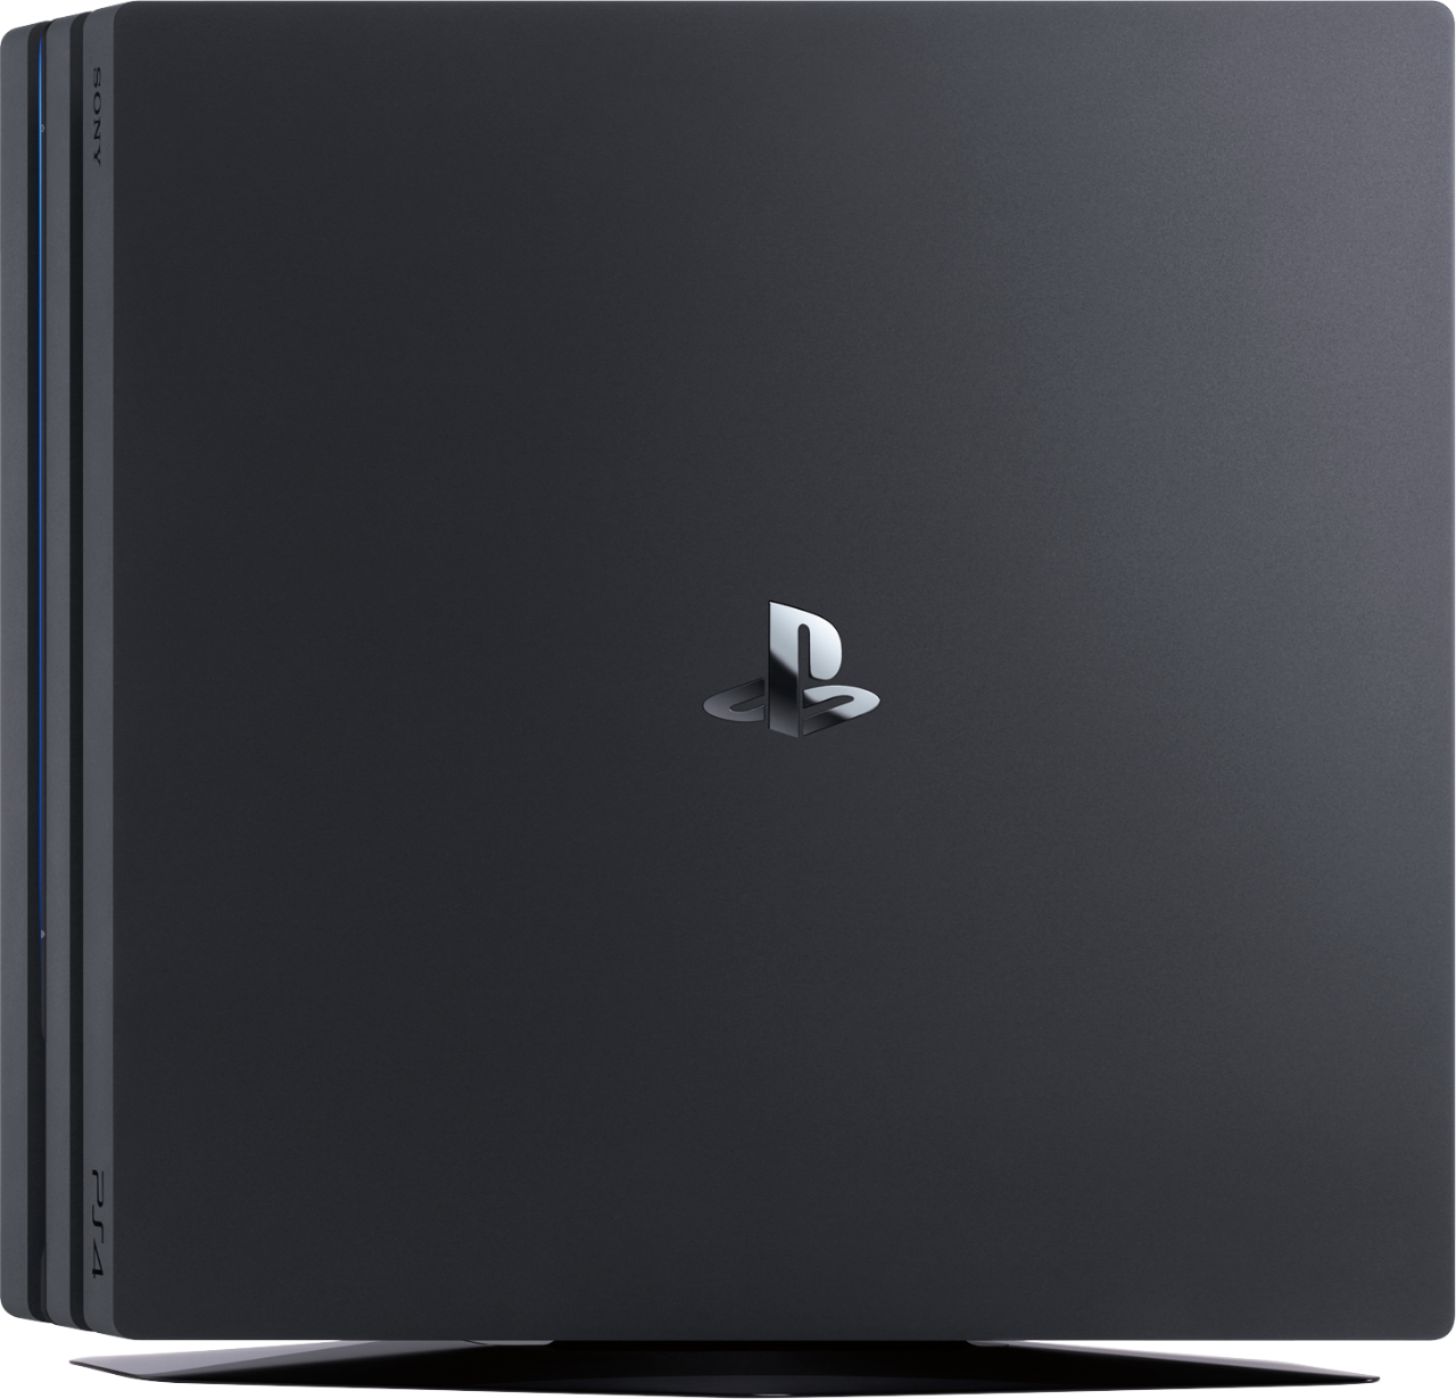 Sony Squad Certified Refurbished PlayStation 4 Console Jet Black GSRF 3003346 - Best Buy